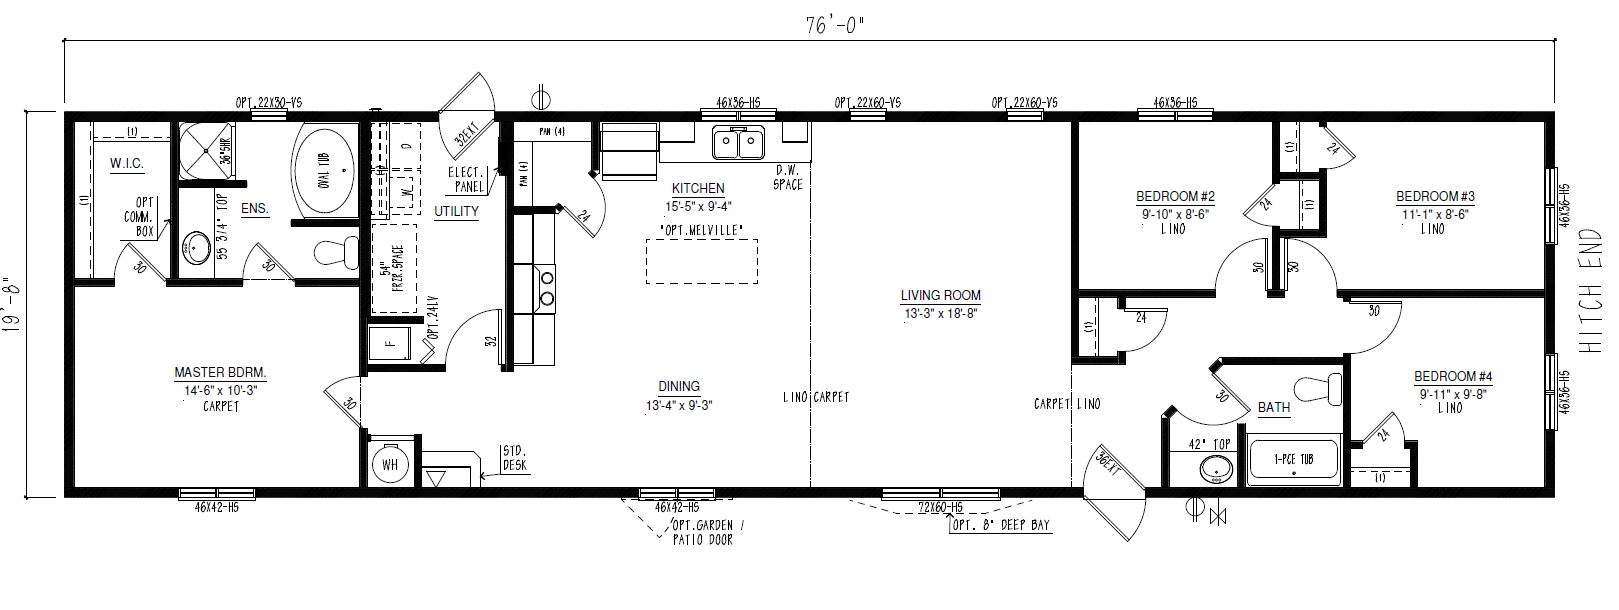 Henley floorplan/blueprint